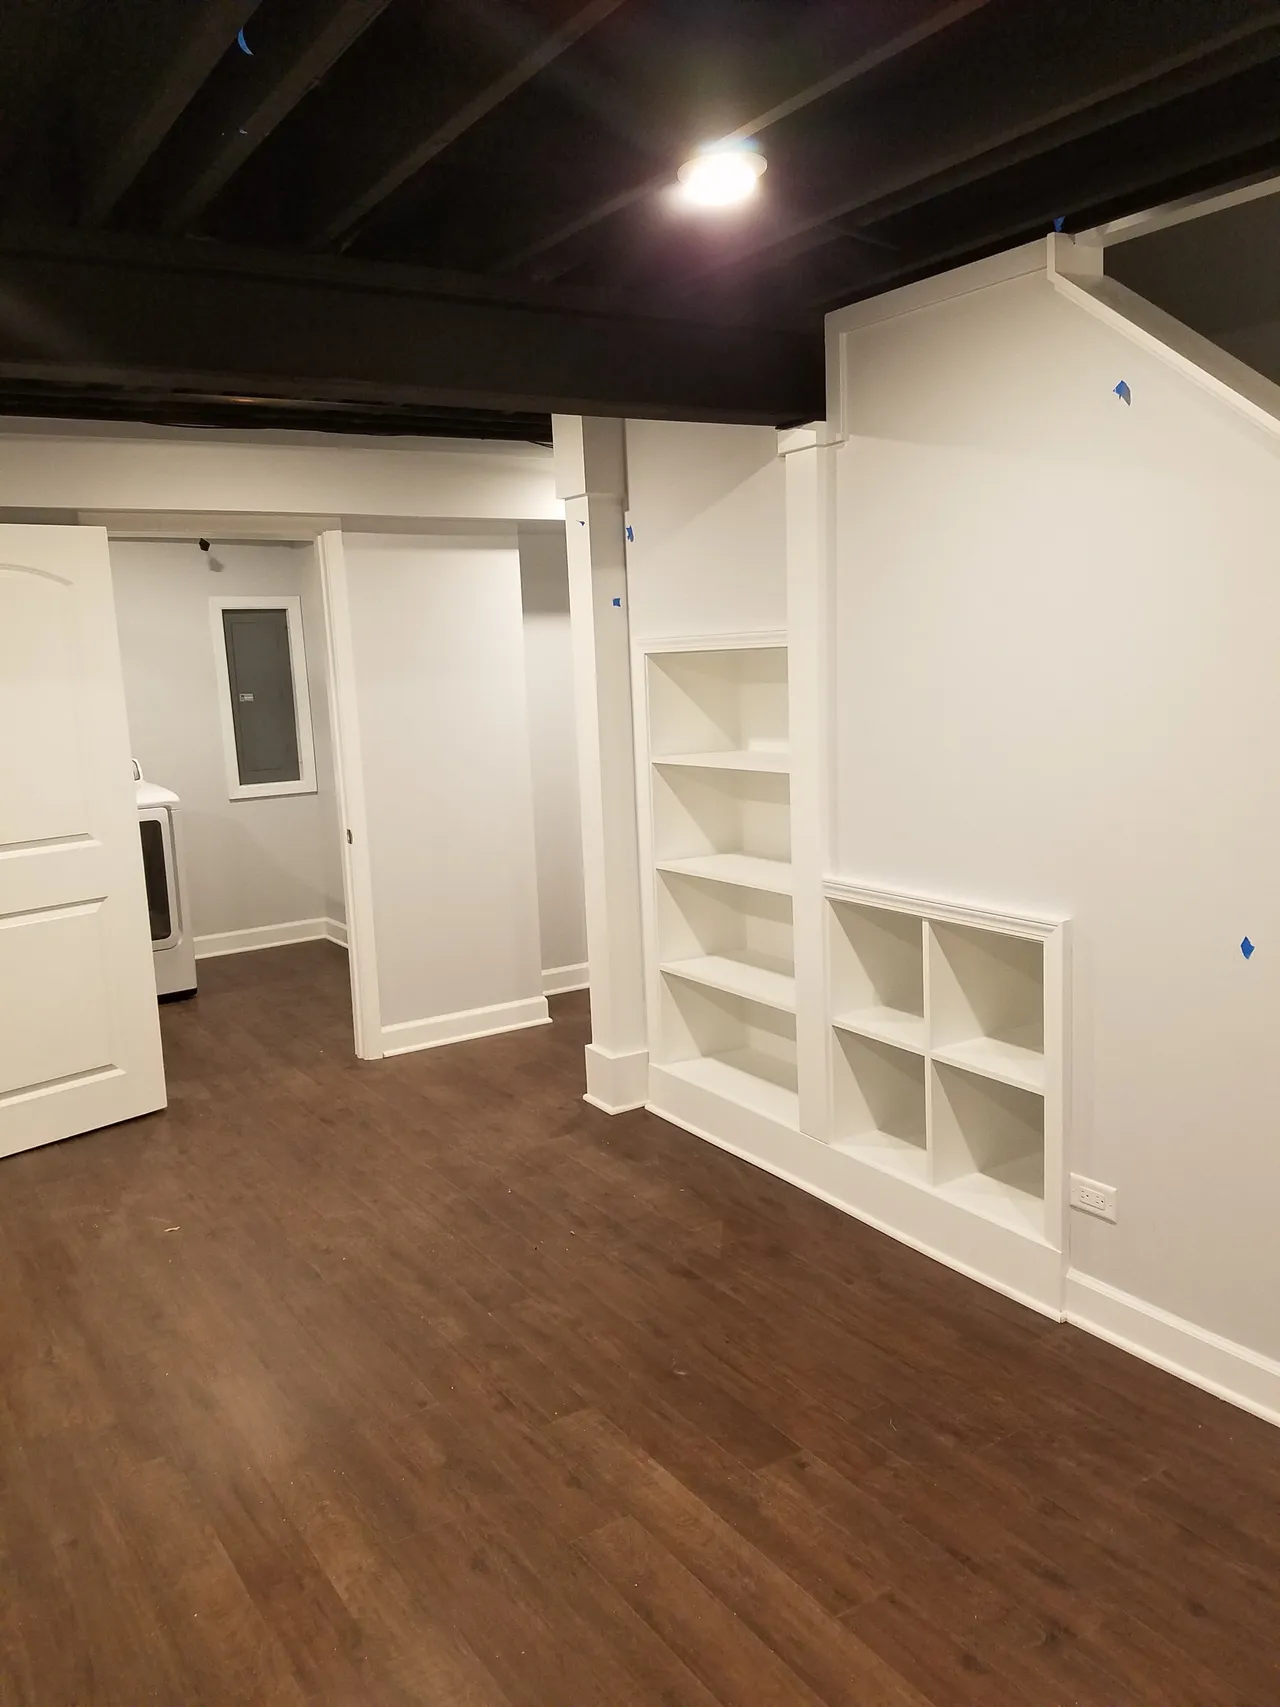 built-in shelving in basement remodel with hardwood flooring laminate 